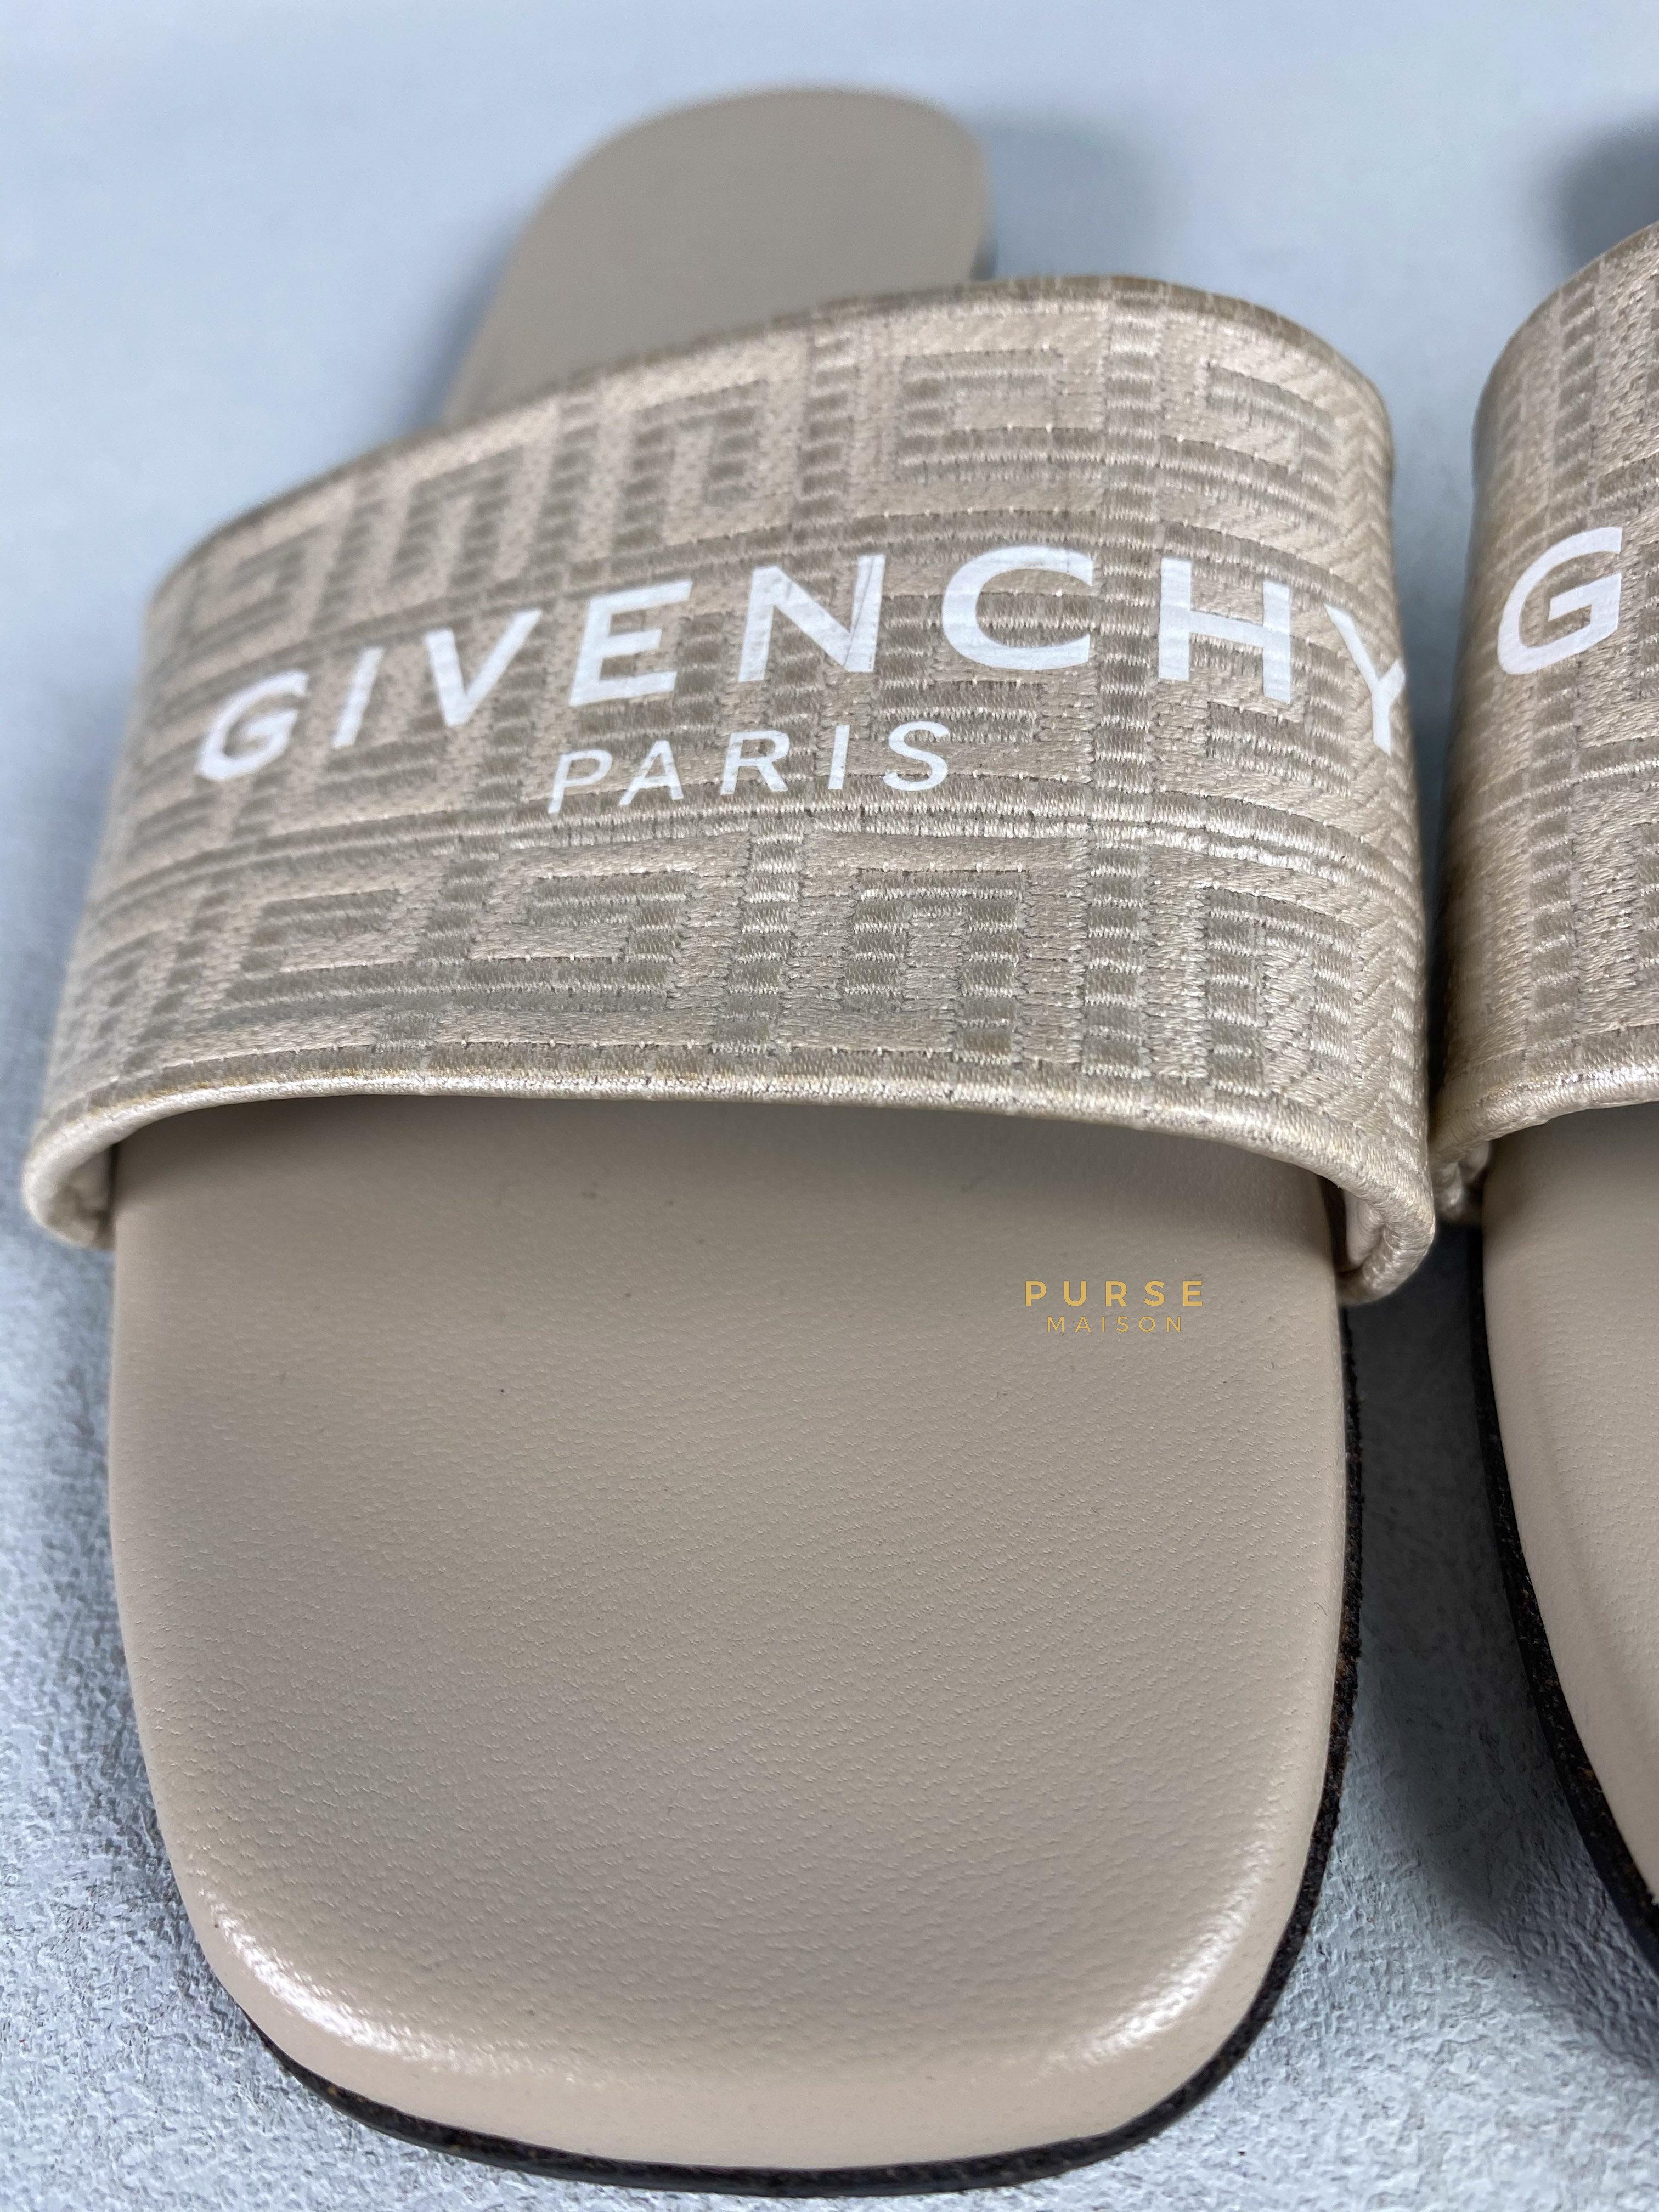 Givenchy 4G Logo Coated Canvas Slide Sandals in Natural Beige Size 36 EU | Purse Maison Luxury Bags Shop